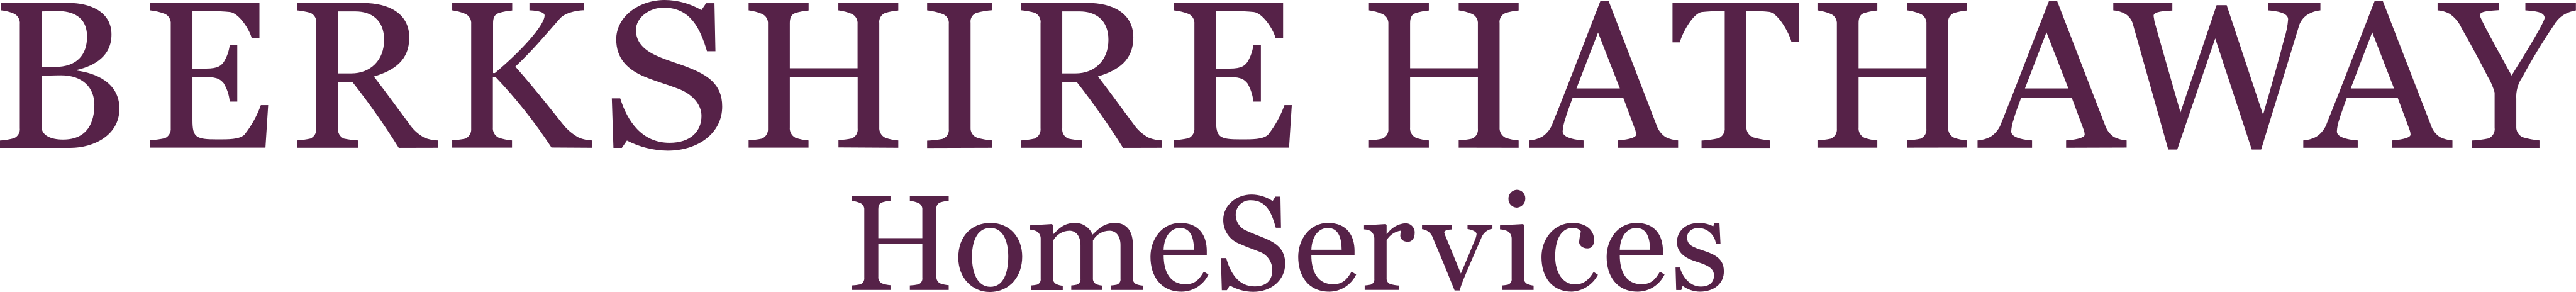 berkshire hathaway home services logo 3 - Berkshire Hathaway HomeServices Logo